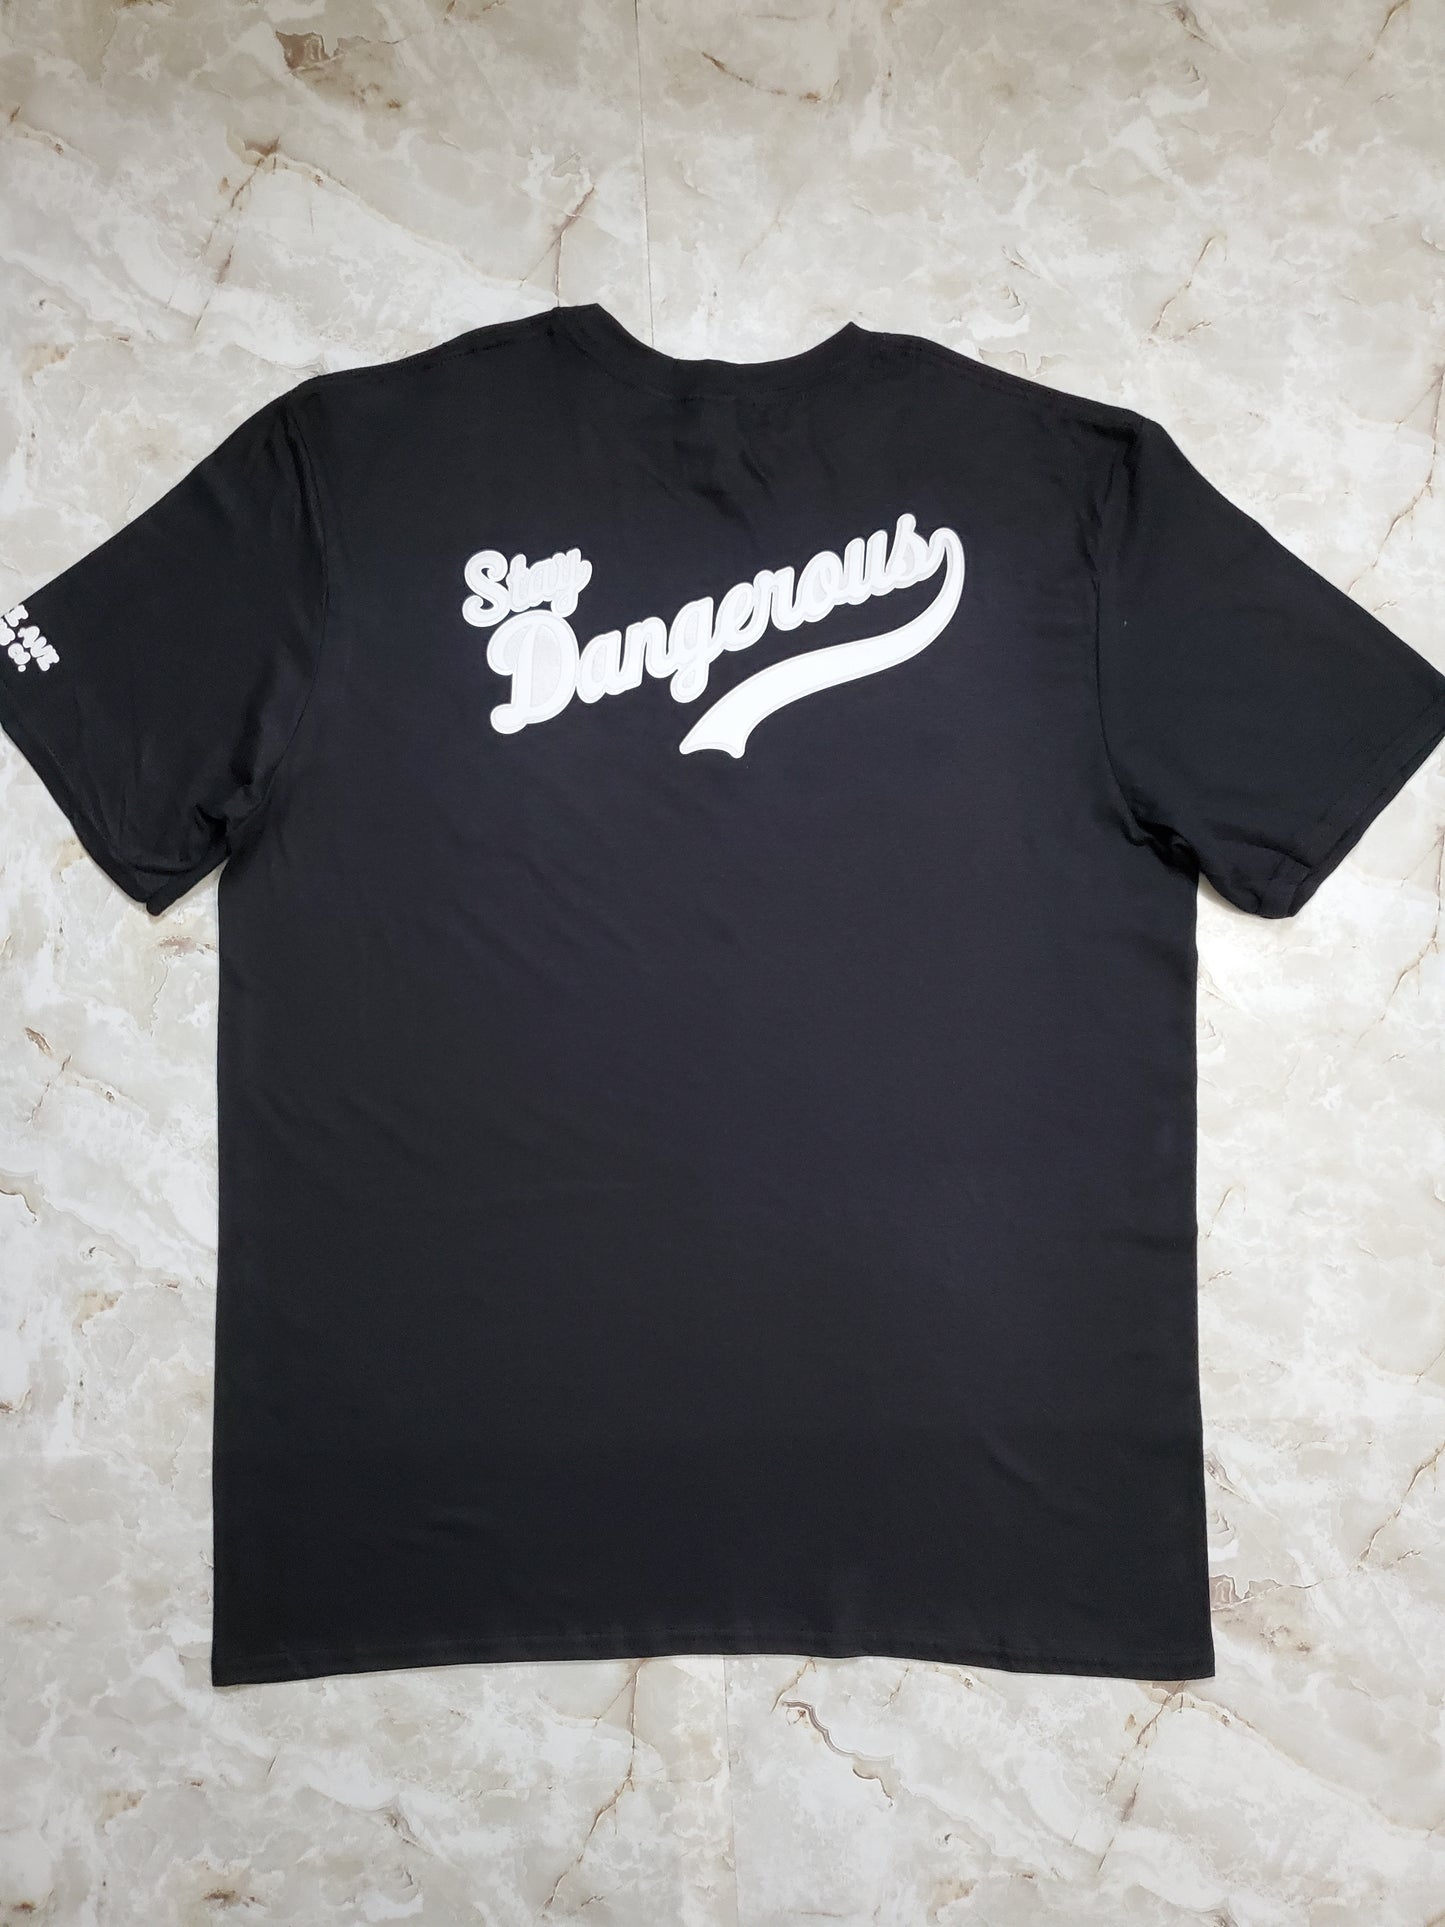 Stay Dangerous T-Shirt (Black) - Centre Ave Clothing Co.